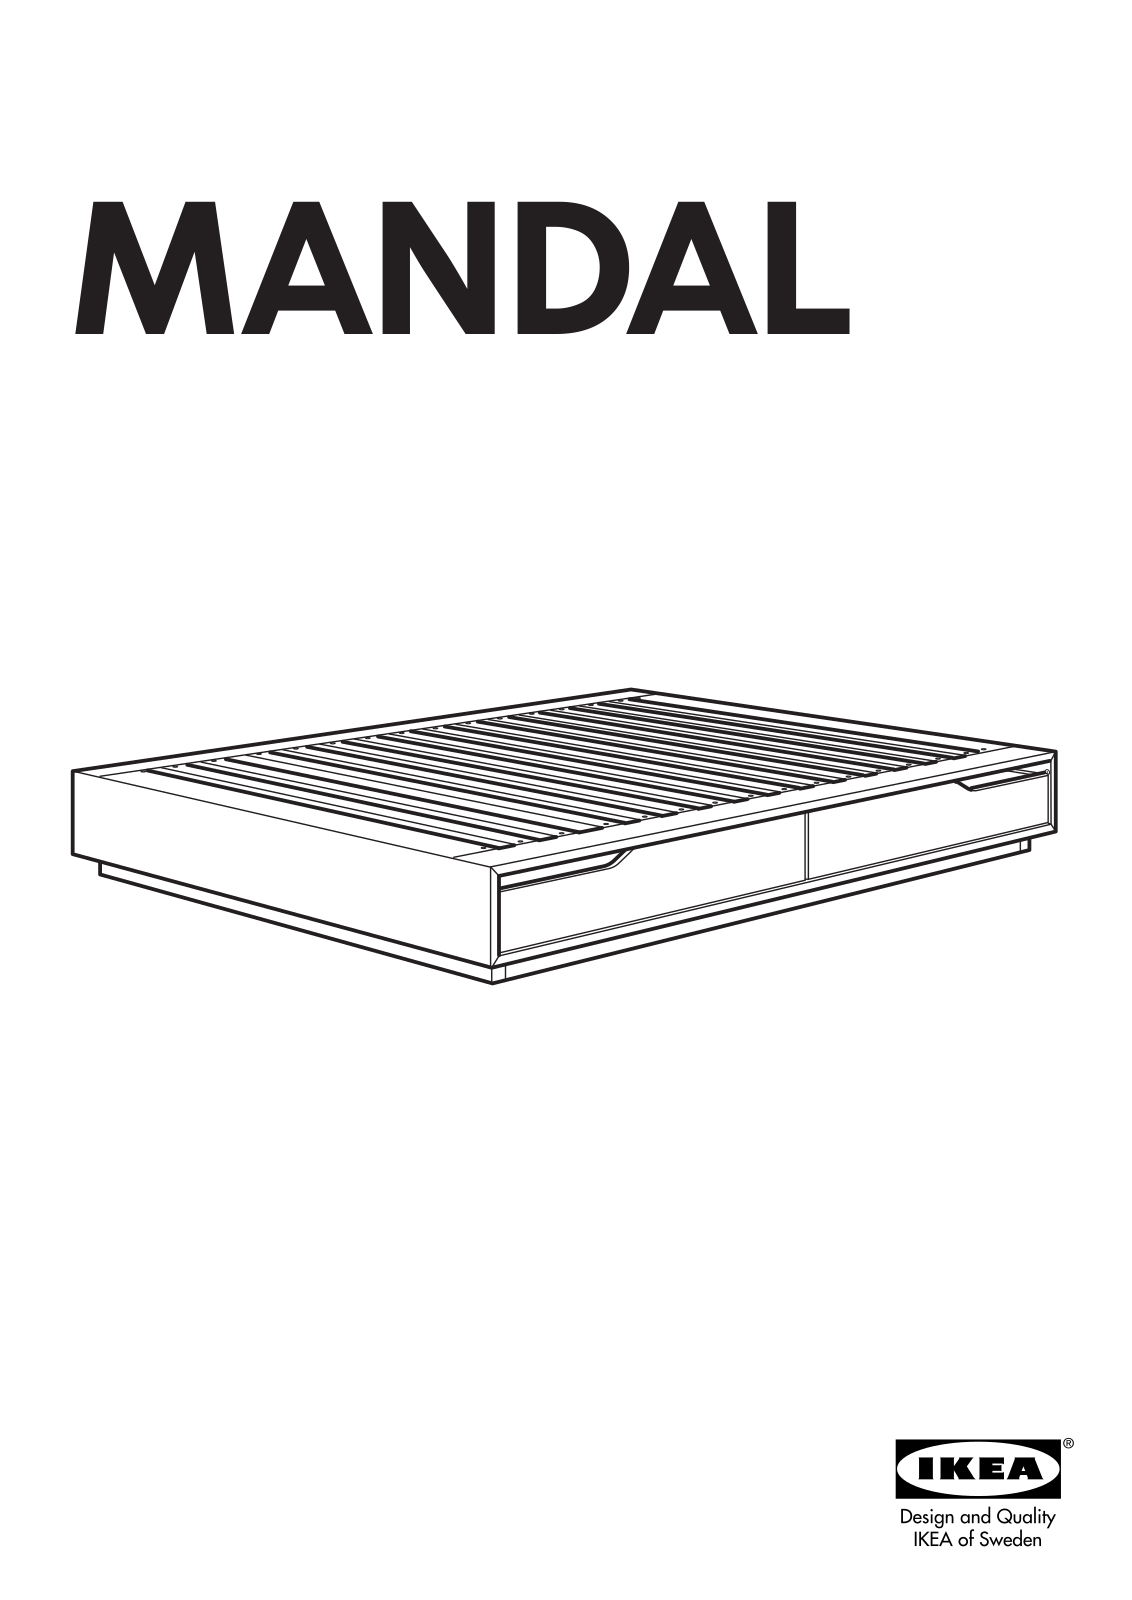 IKEA MANDAL BEDFRAME W- STORAGE BOX QUEEN, MANDAL BEDFRAME W- STORAGE BOX FULL-DOUBLE Assembly Instruction